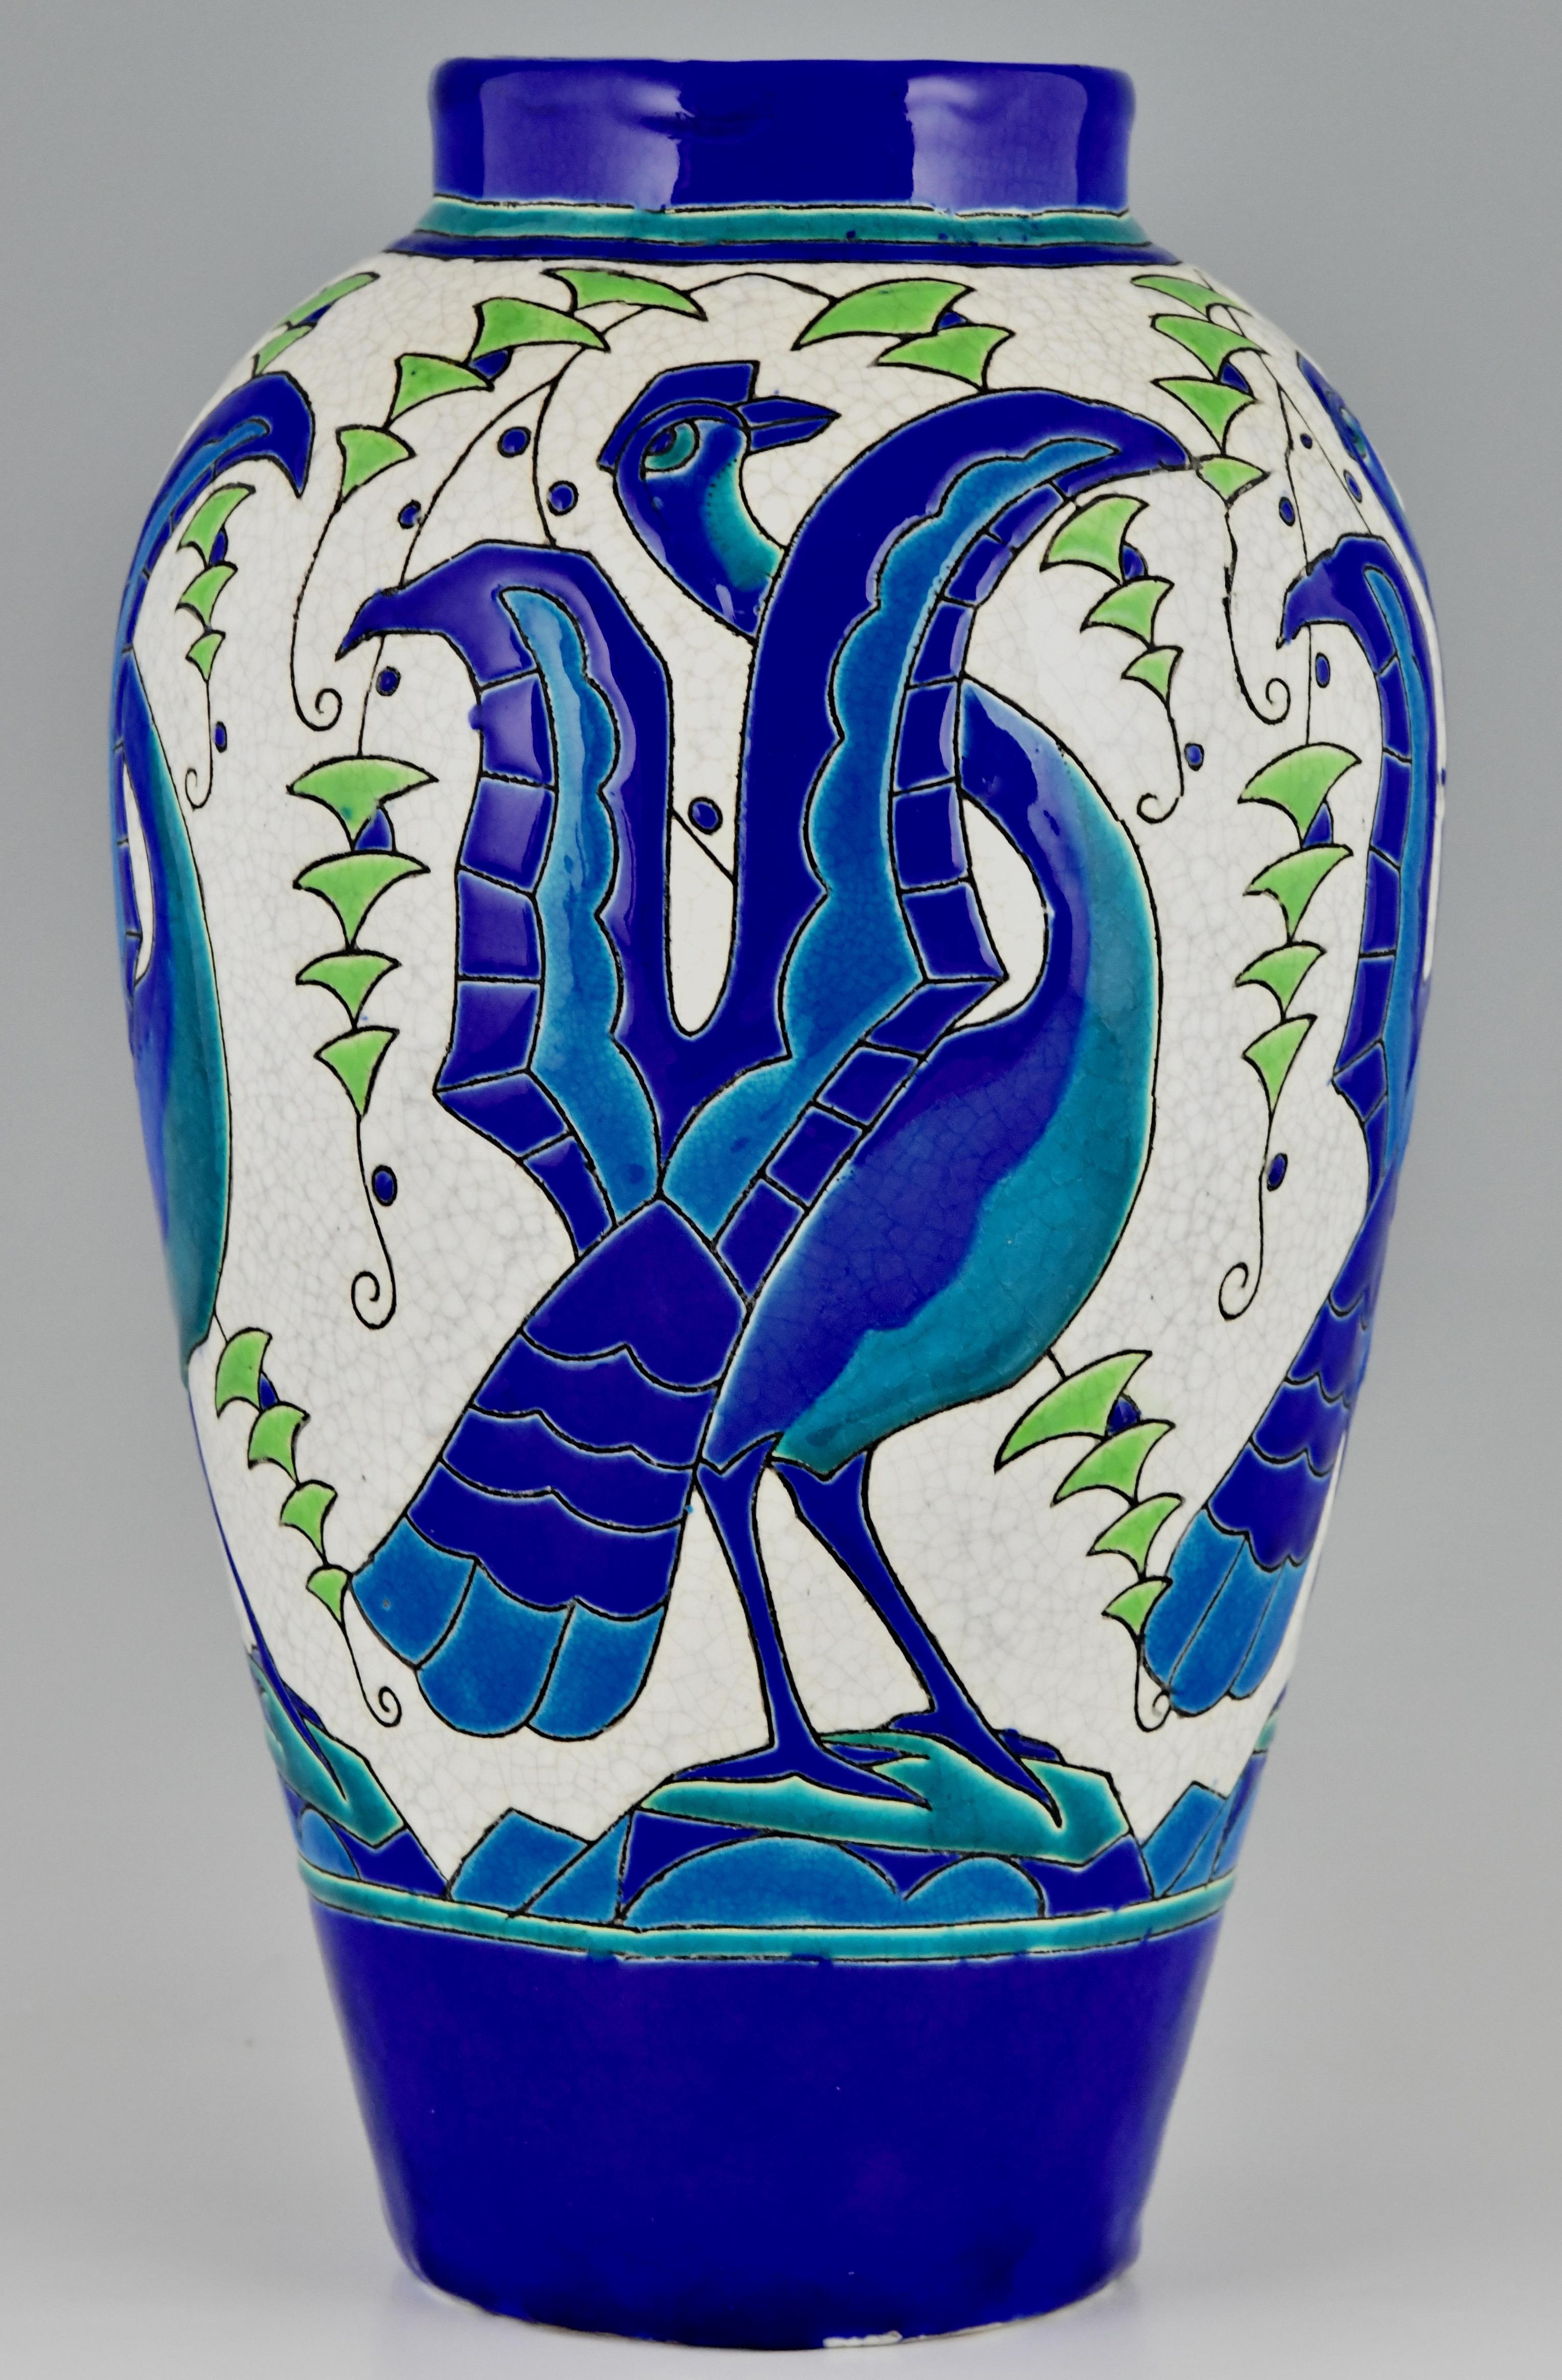 Enameled Art Deco Ceramic Vase with Stylized Birds, Charles Catteau for Keramis, 1931